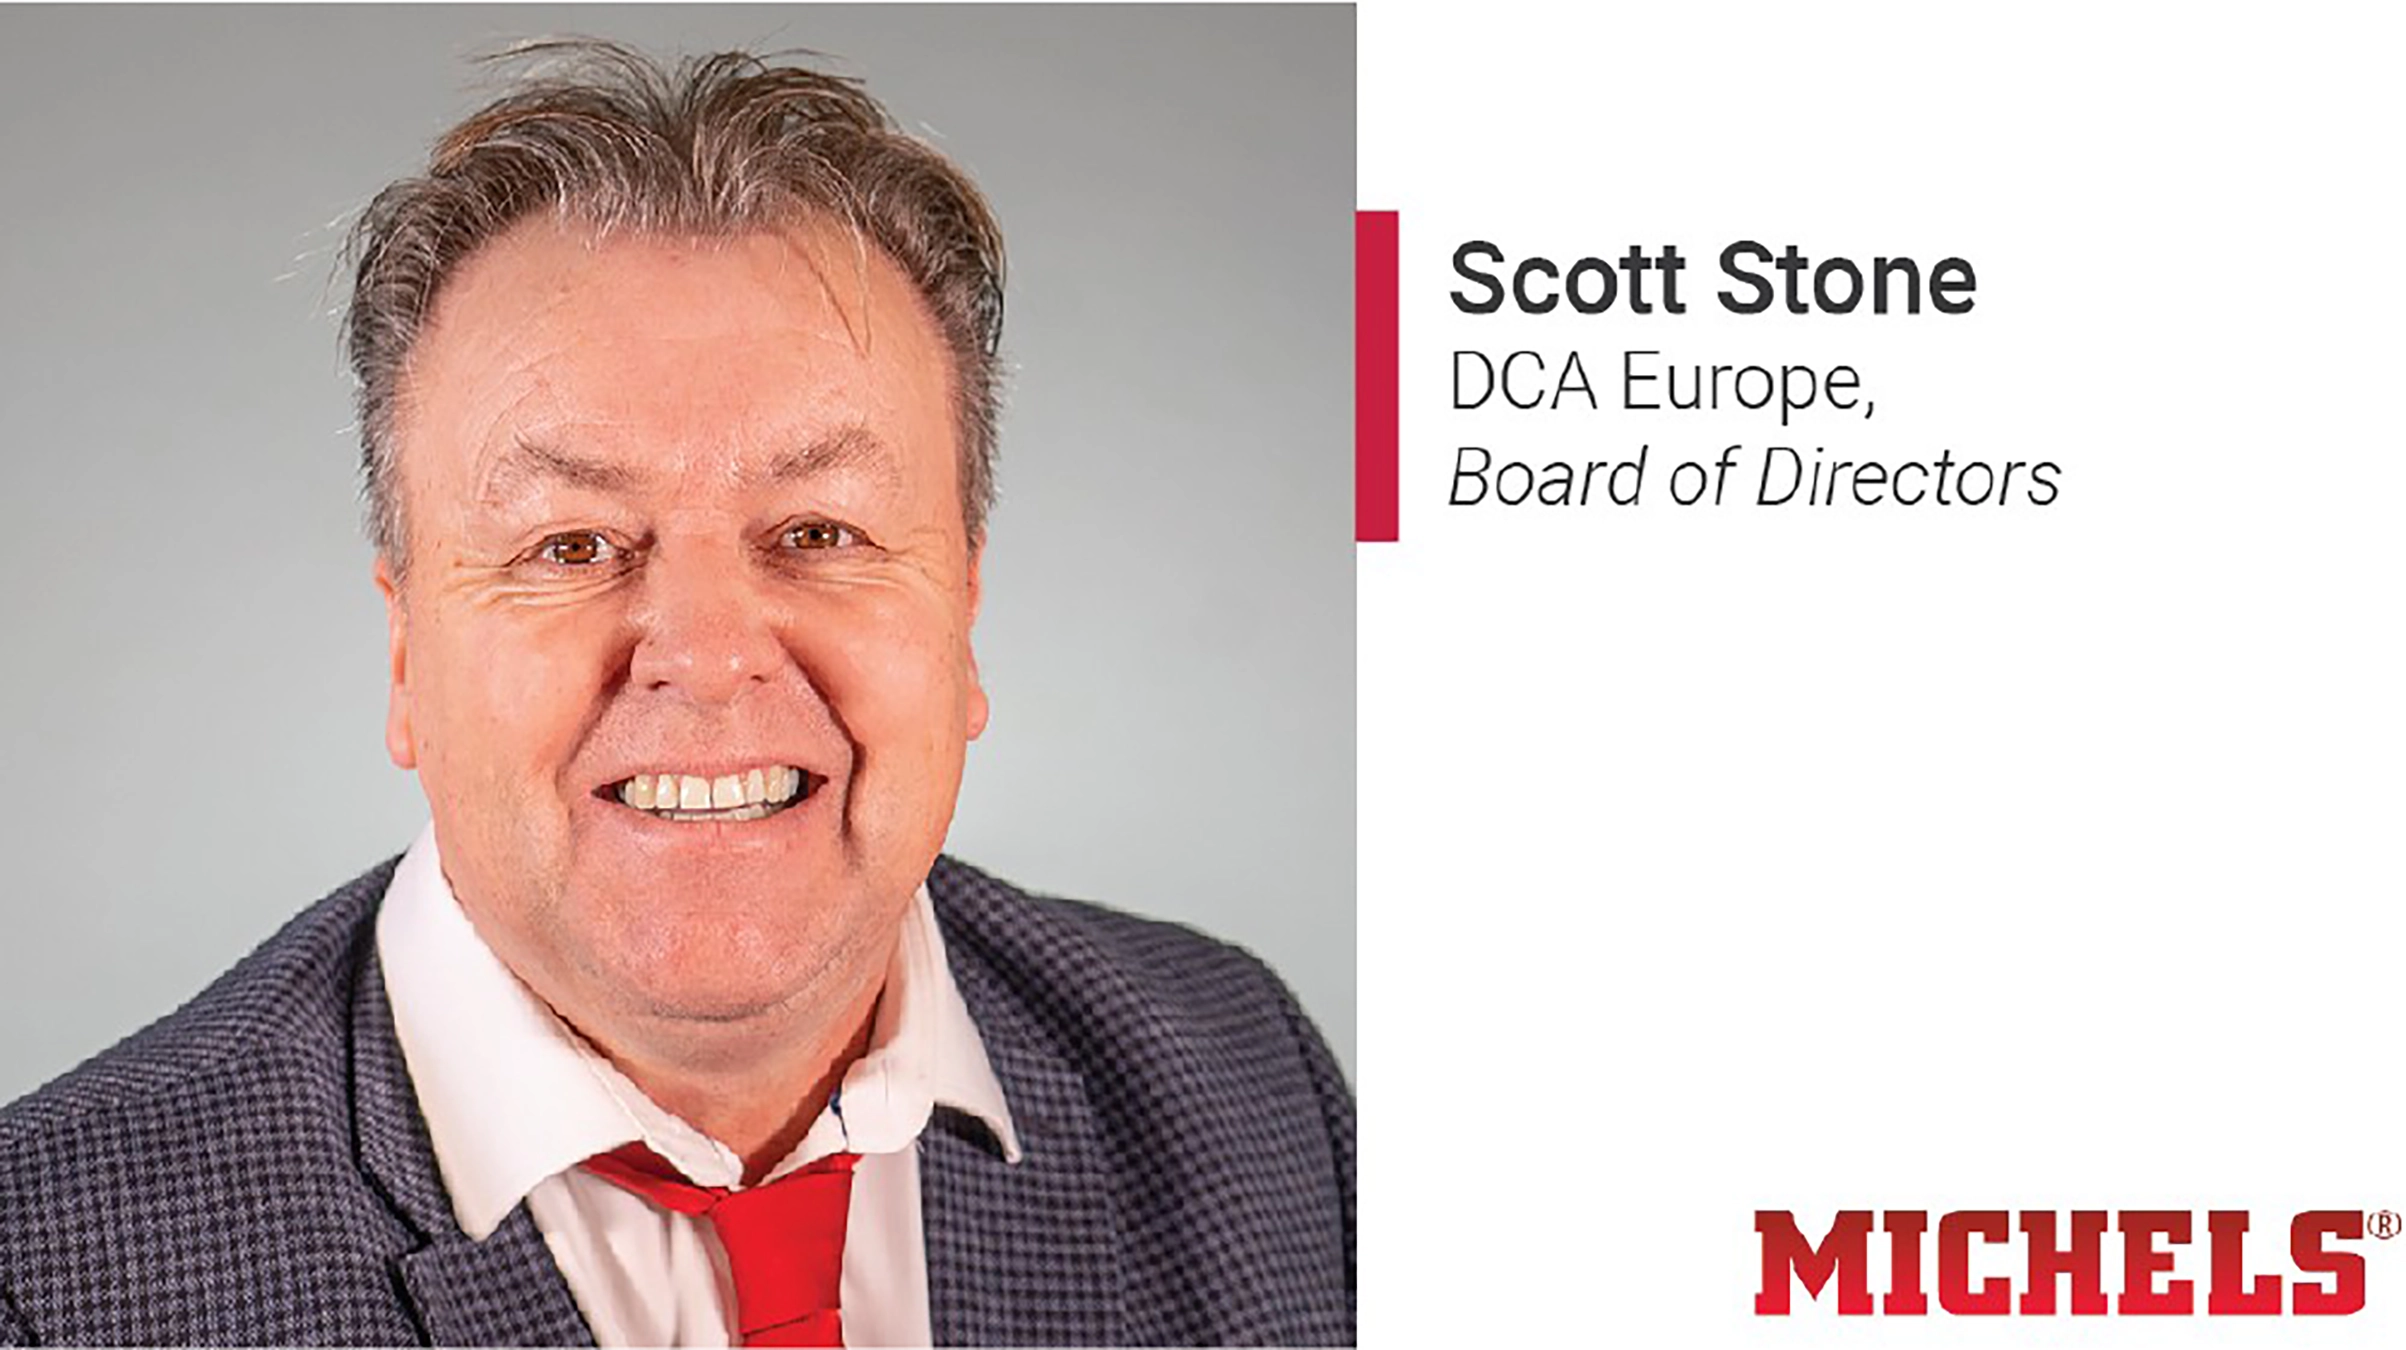 Scott Stone DCA Board of Directors